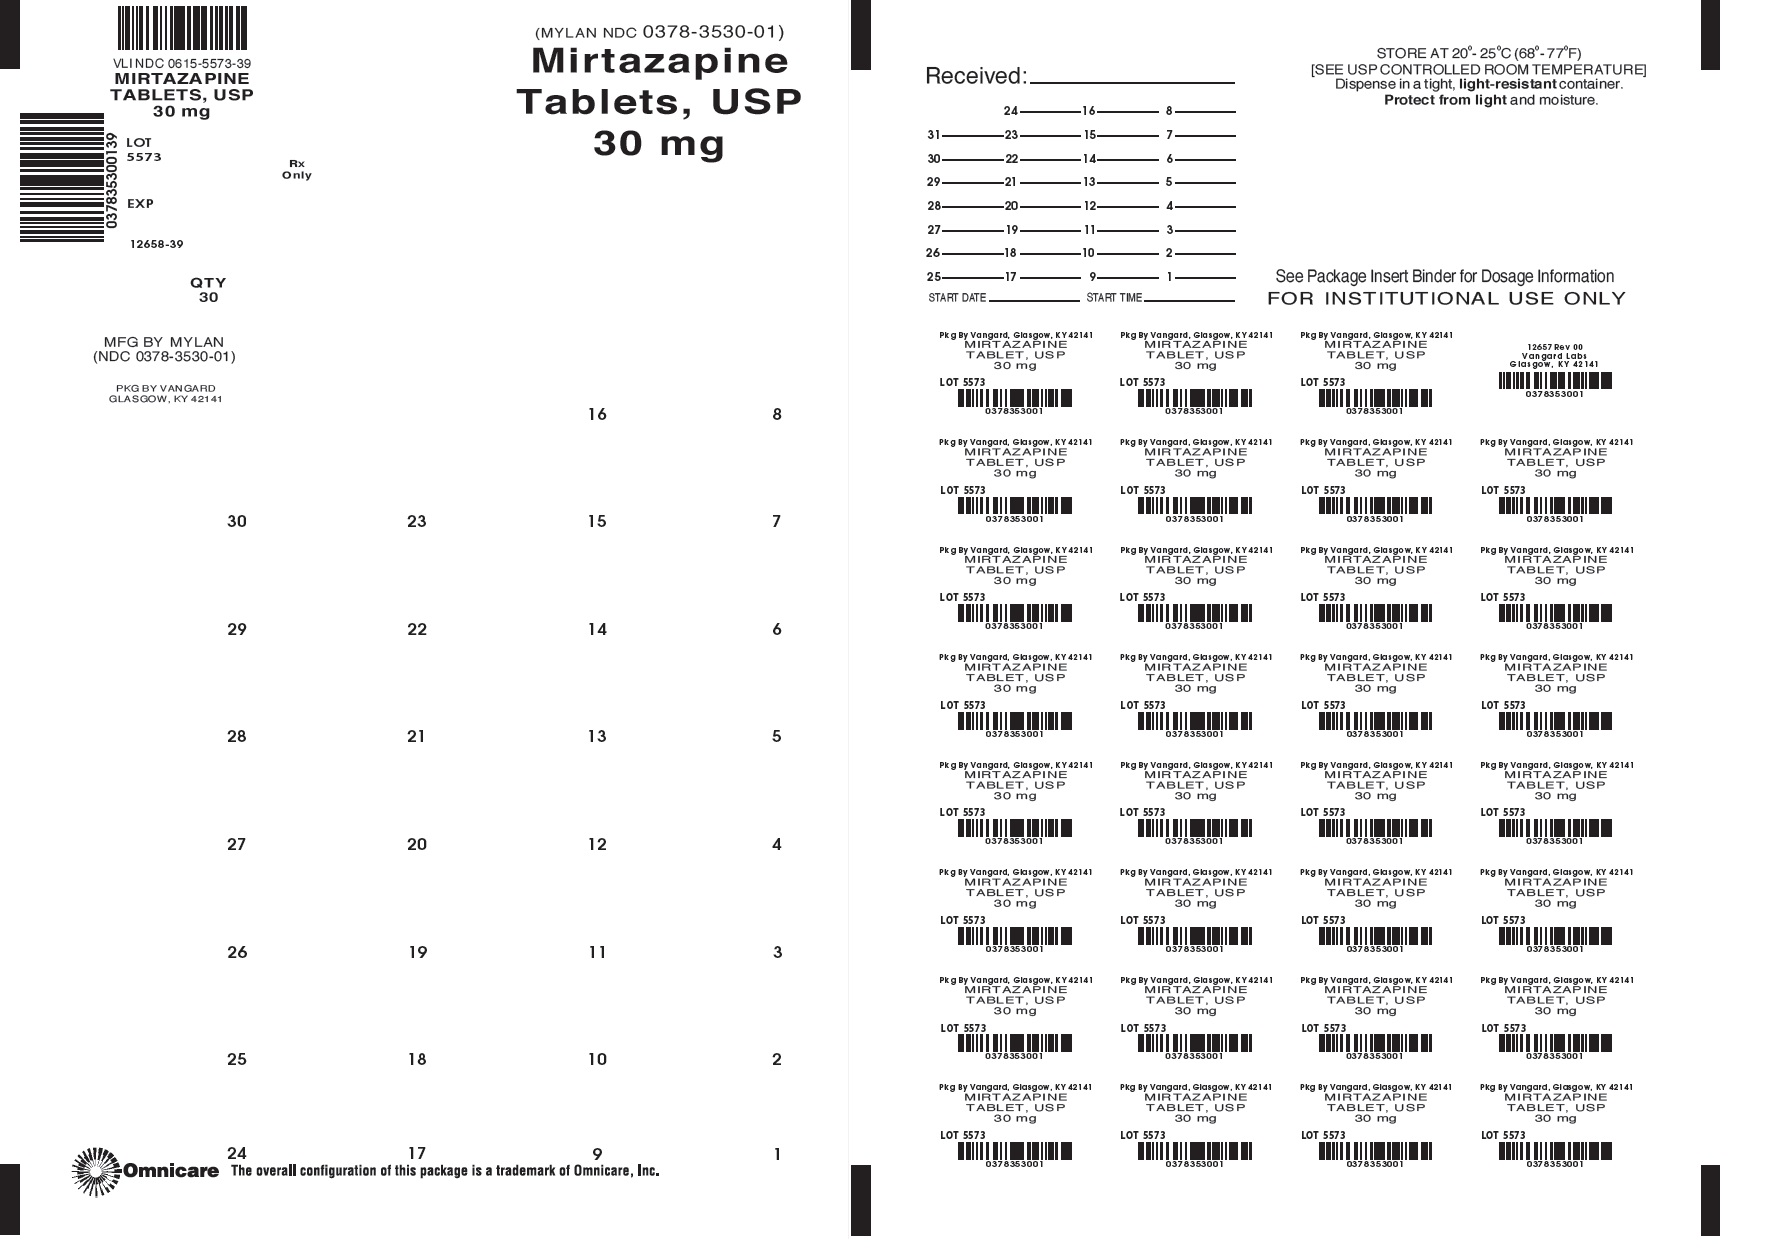 Mirtazapine Tablets 30mg bingo label